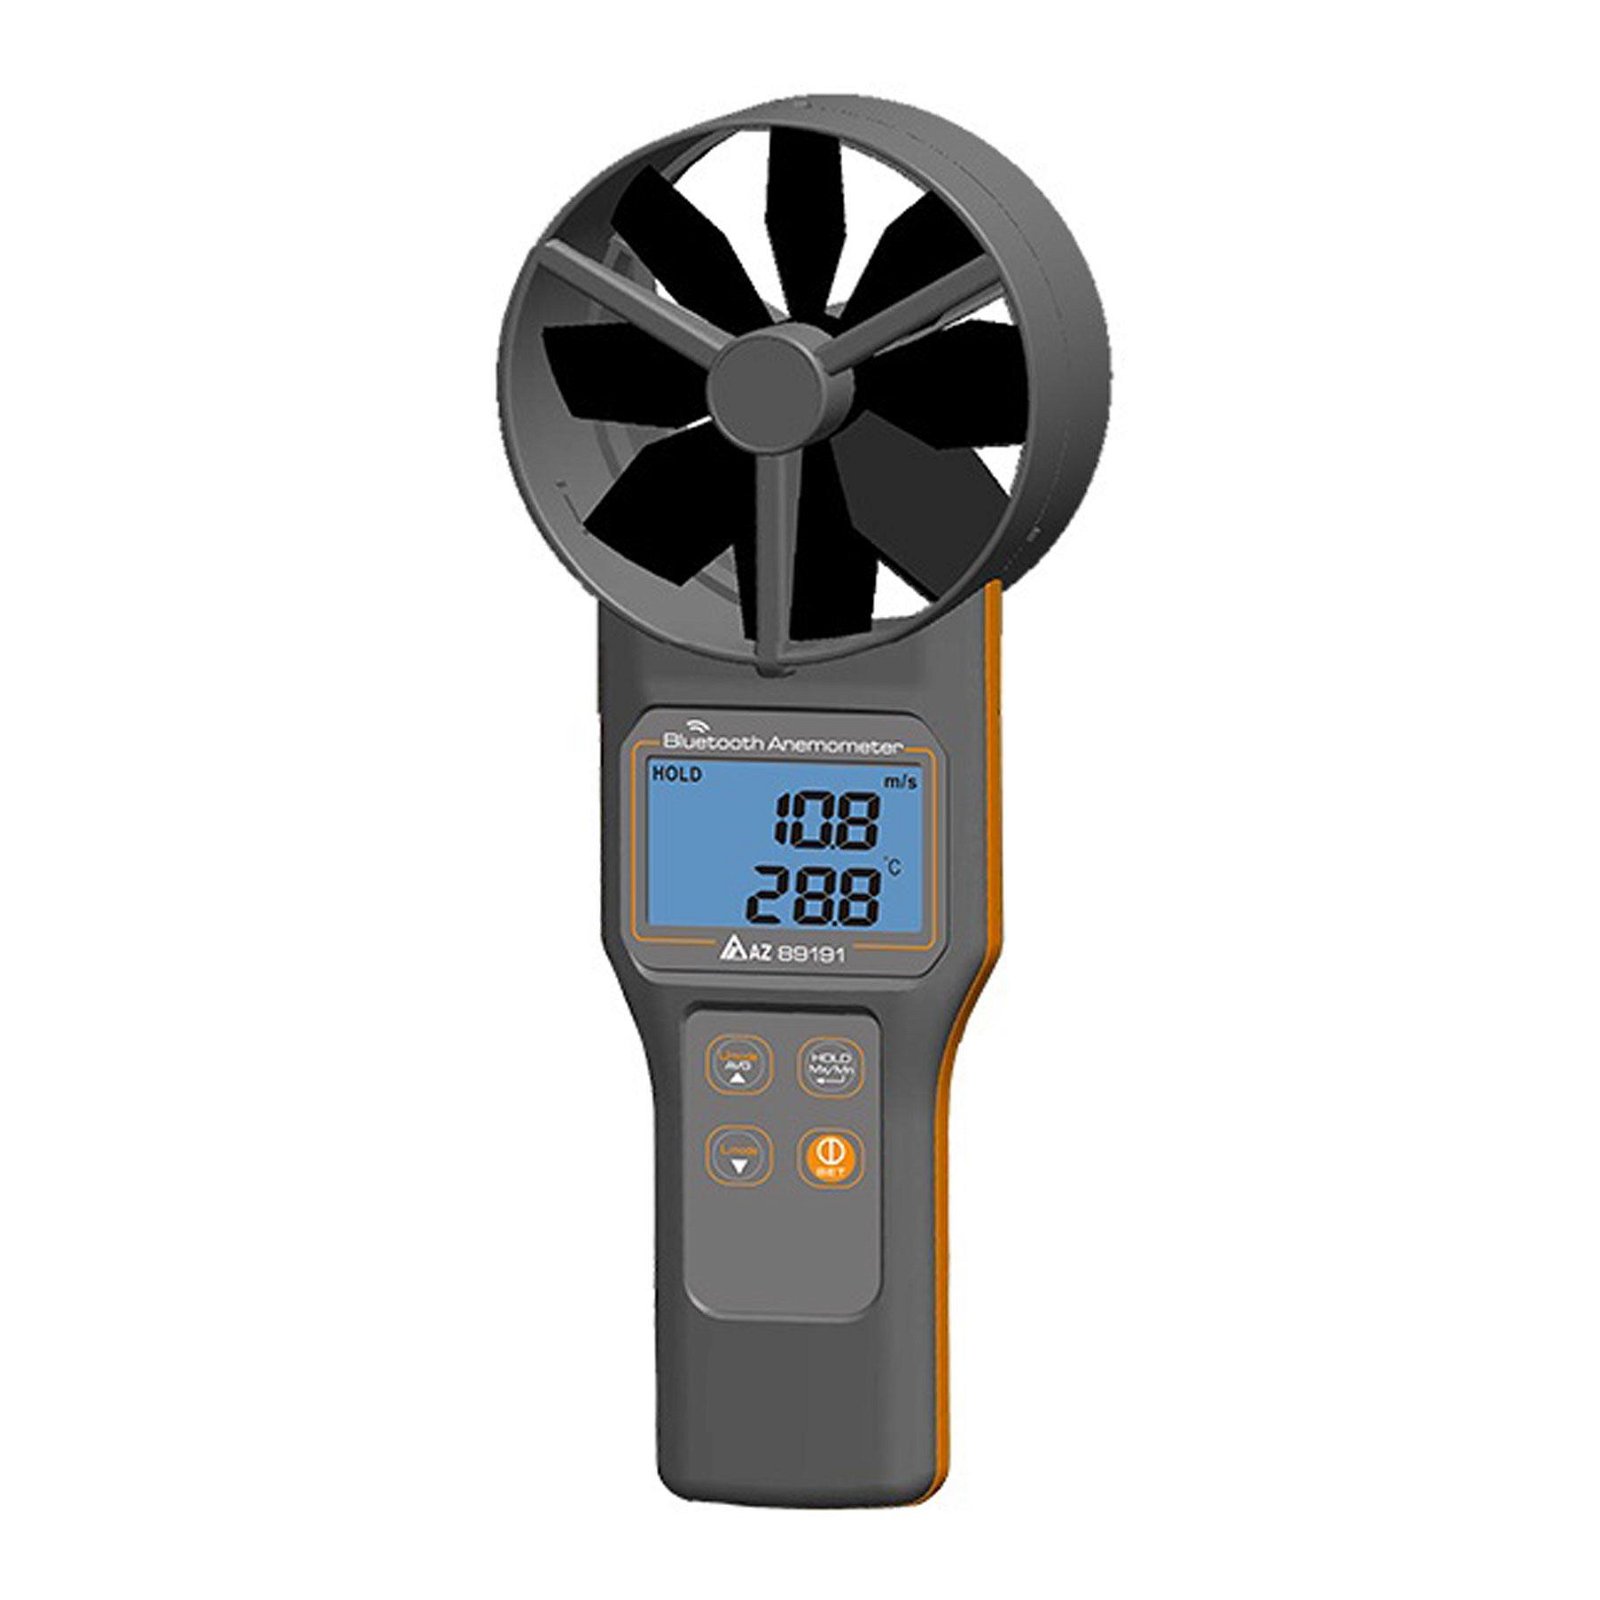 Bluetooth Temp RH Anemometer AZ89171 10 cm Vane Anemometer Wind Velocity Meter